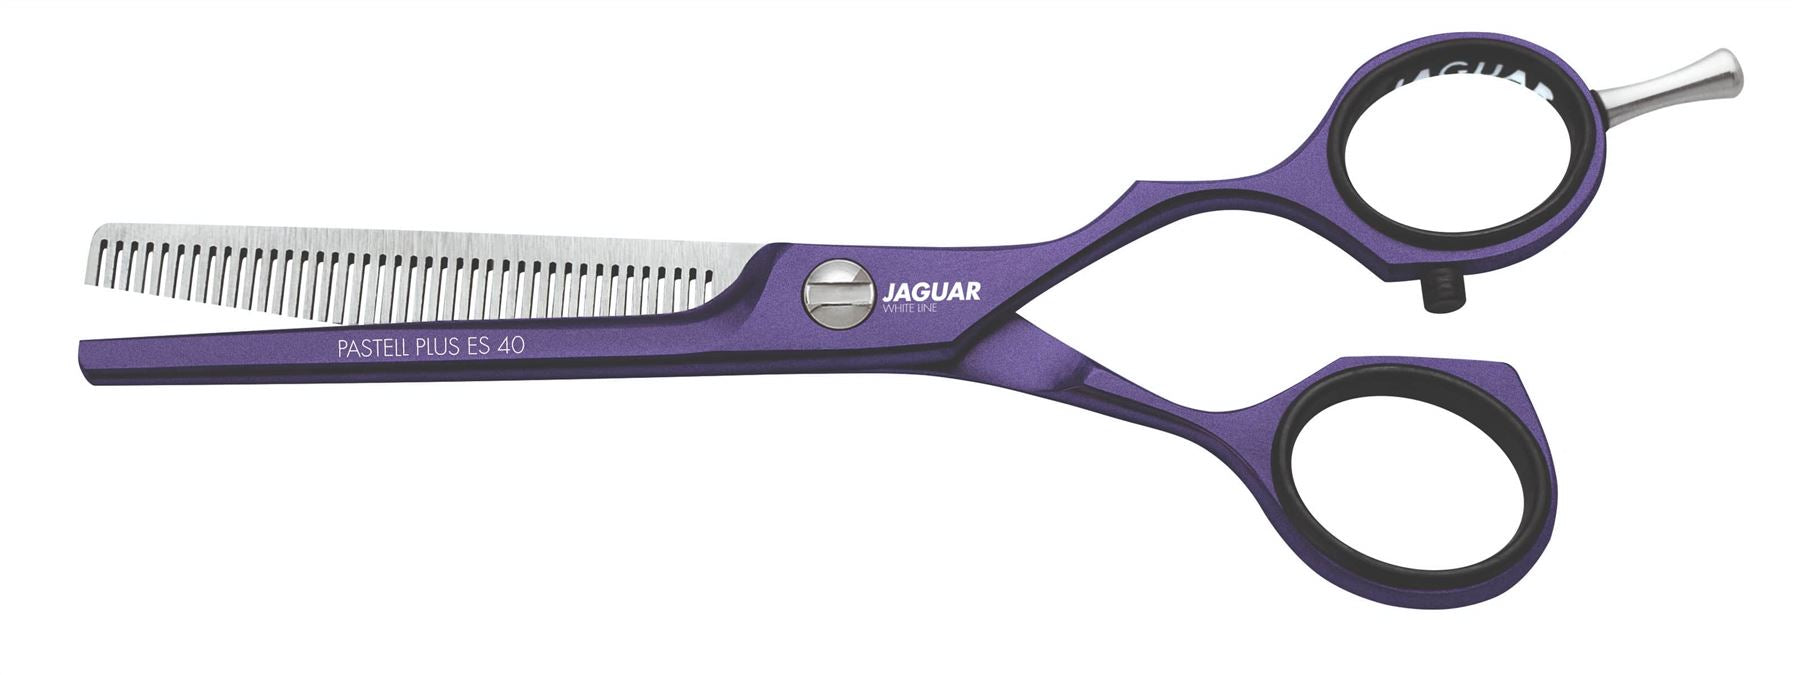 Jaguar Pastell Hairdressing 5" thinning Scissors - Coated Viola